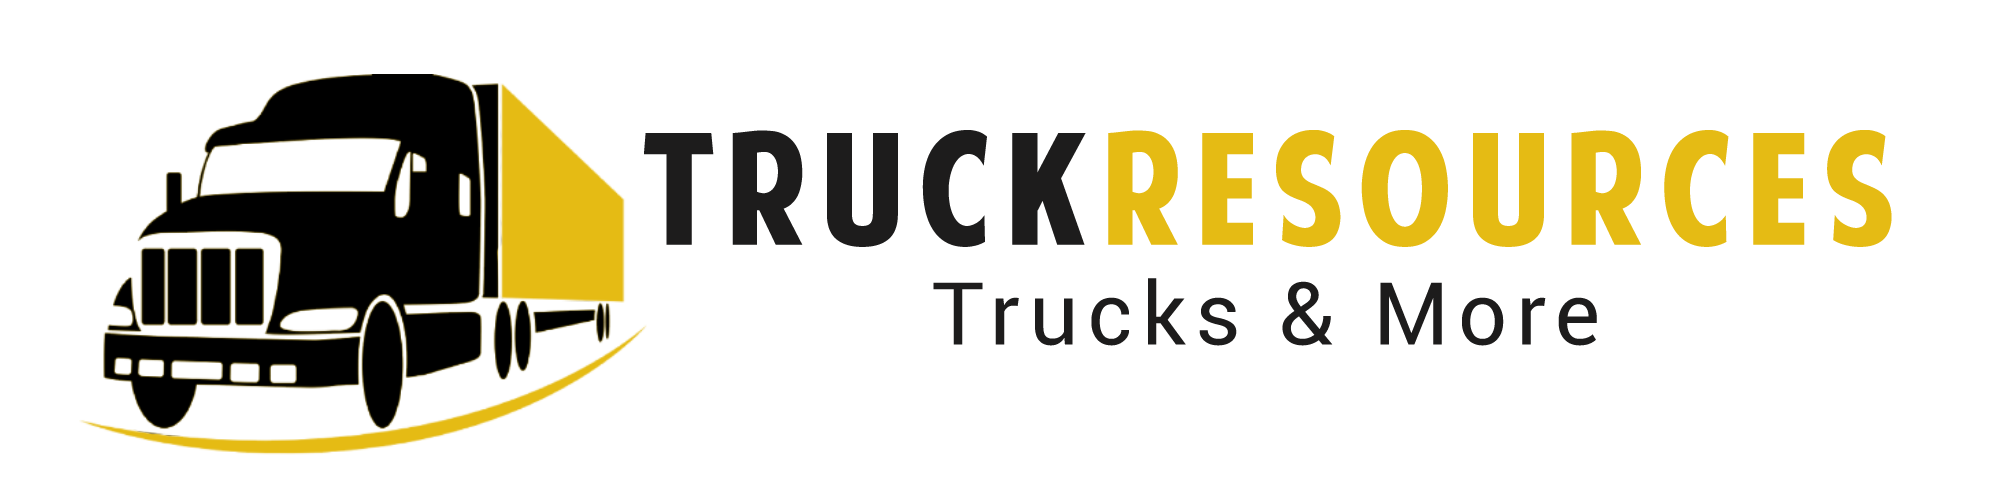 Truck Resource